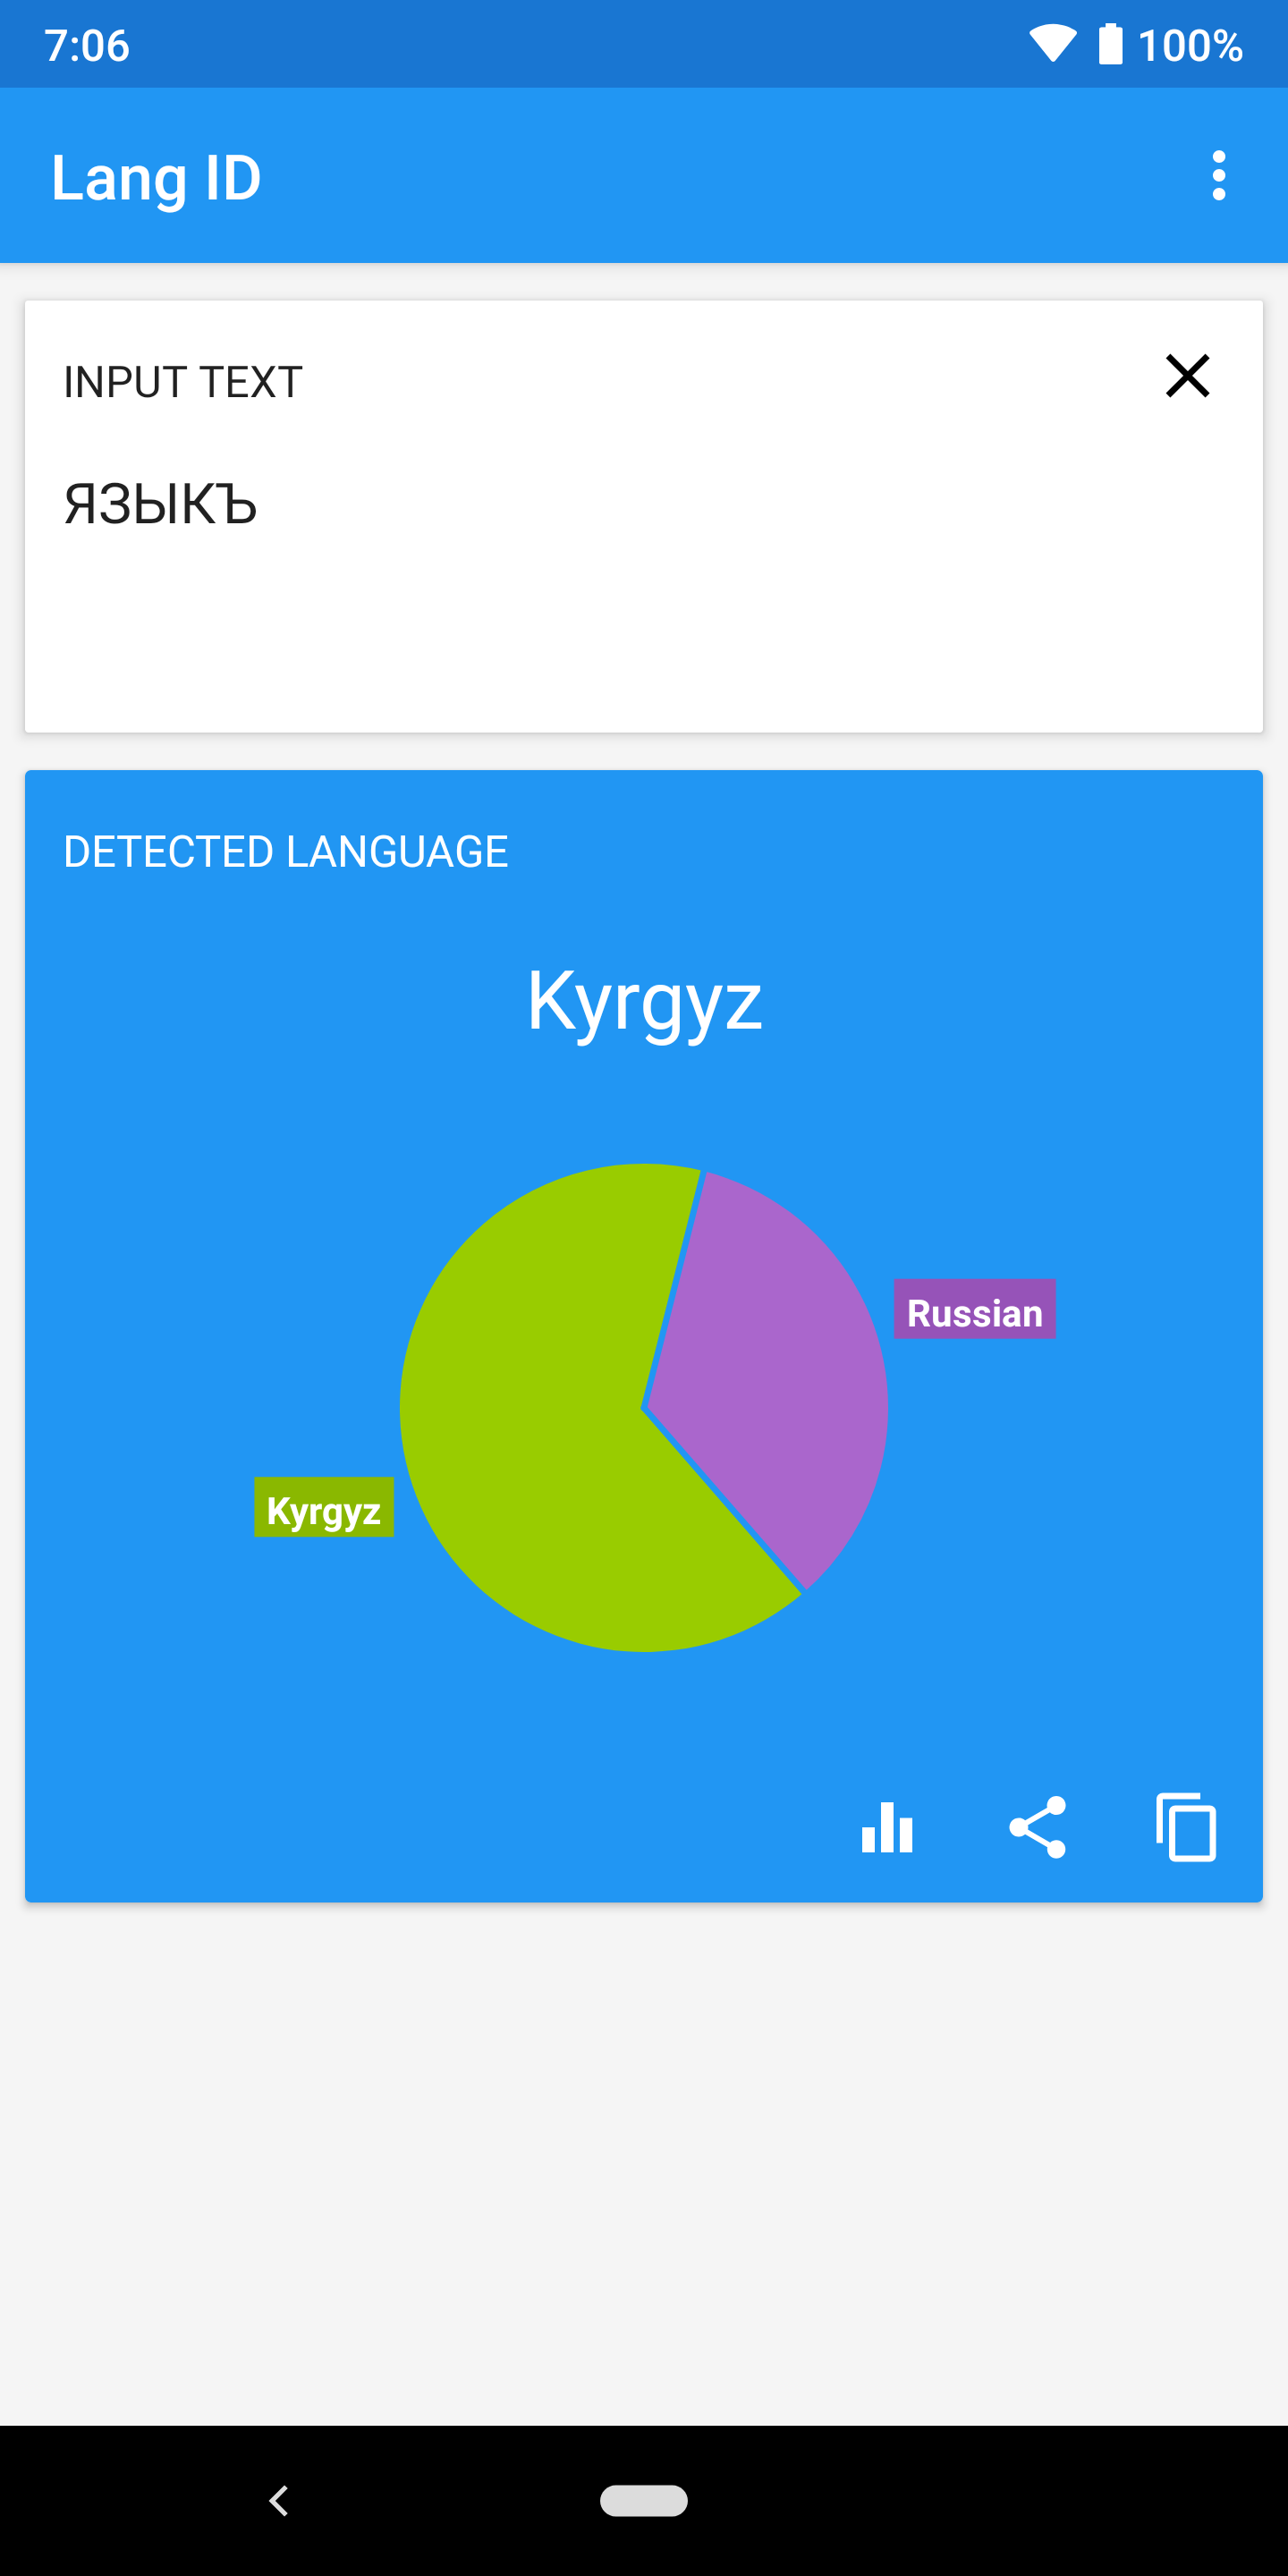 Language identifiers